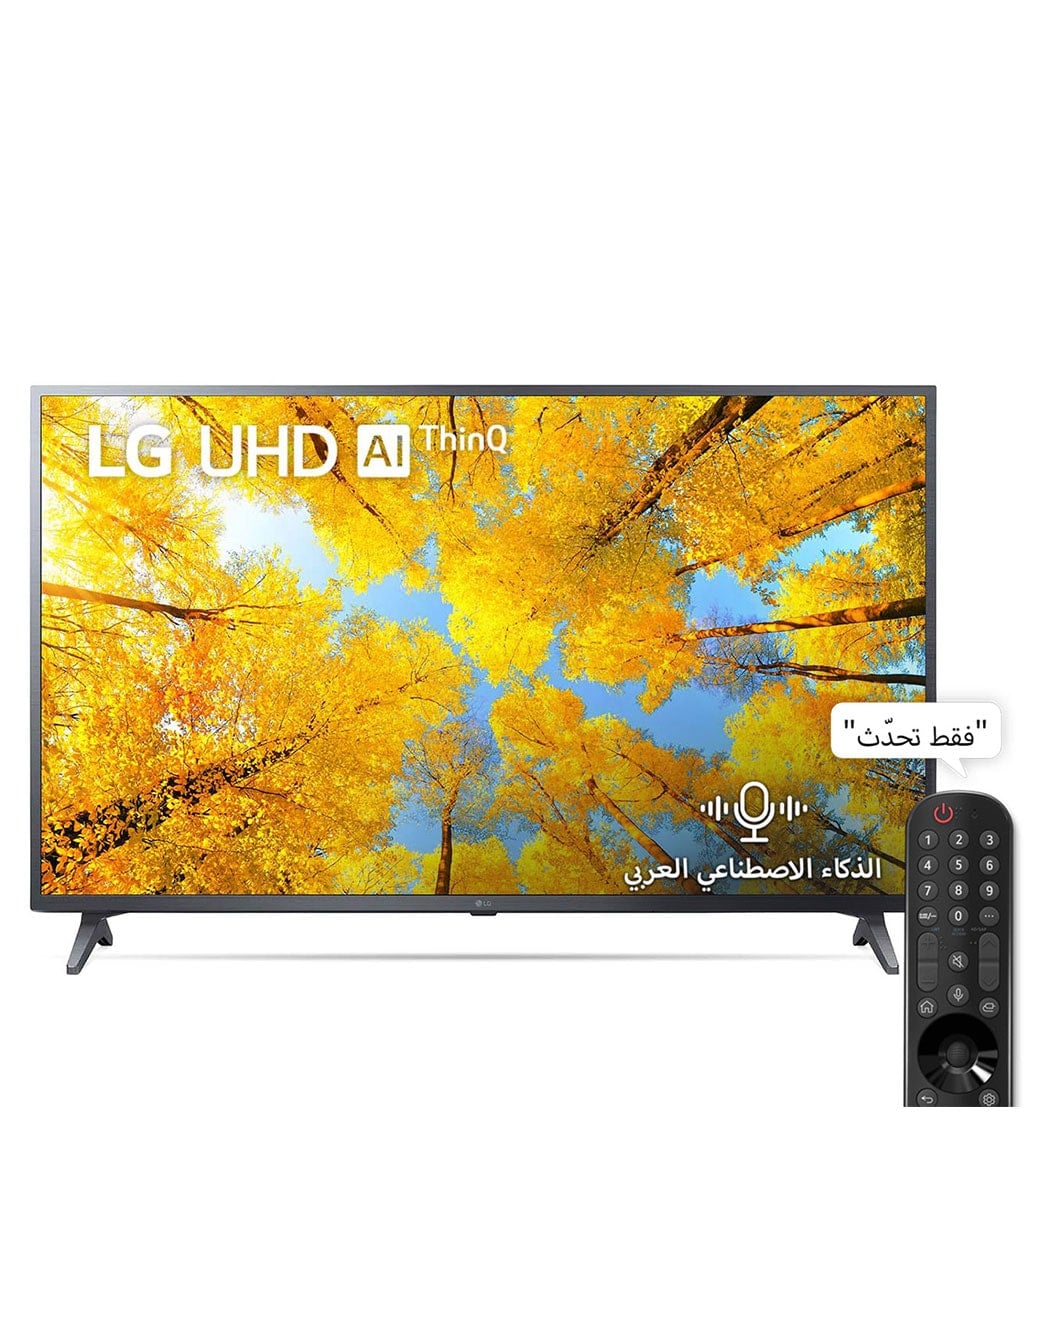 LG 65-inch 4K Ultra High Definition (UHD) TV